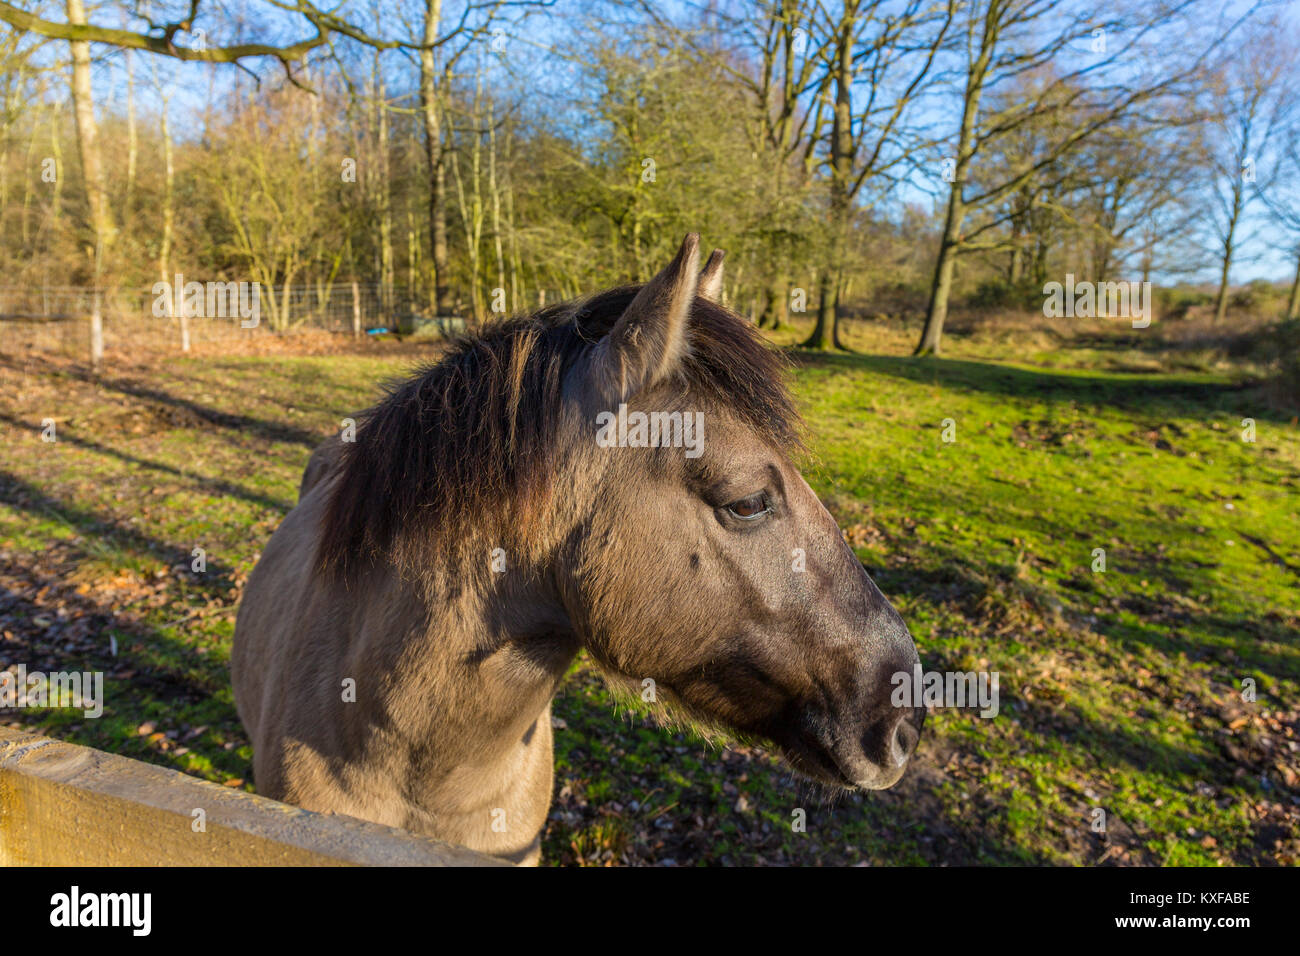 Konik horse at Redgrave and Lopham Fen, Suffolk, UK. Stock Photo